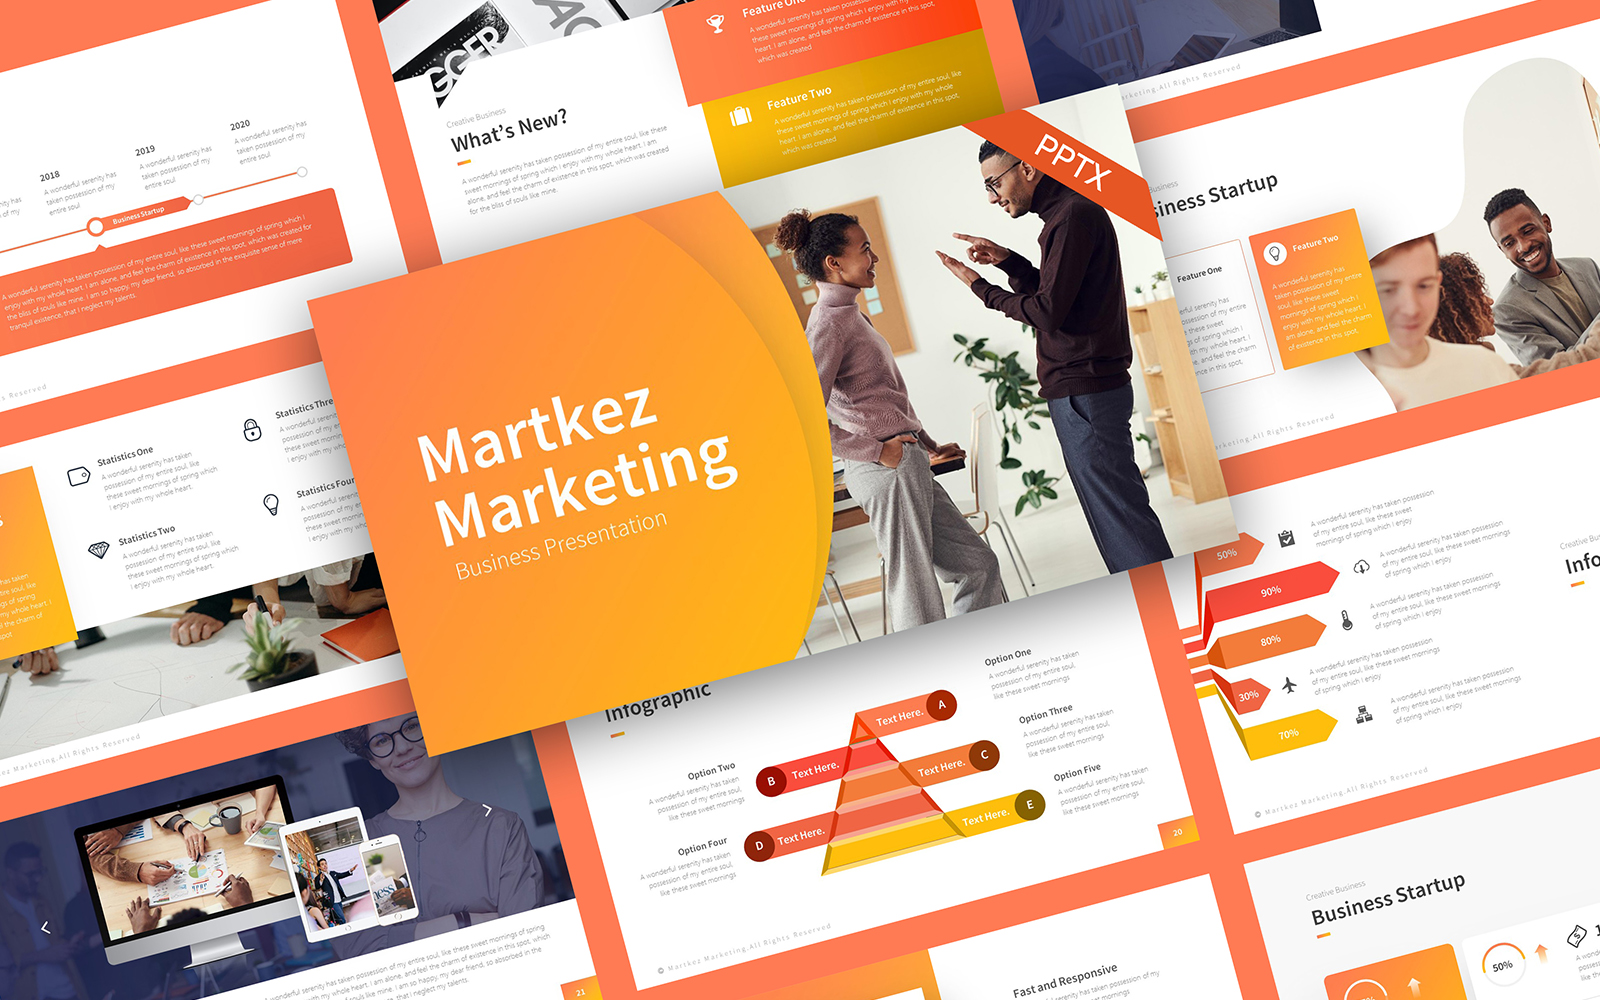 Martkez Business Marketing PowerPoint Template